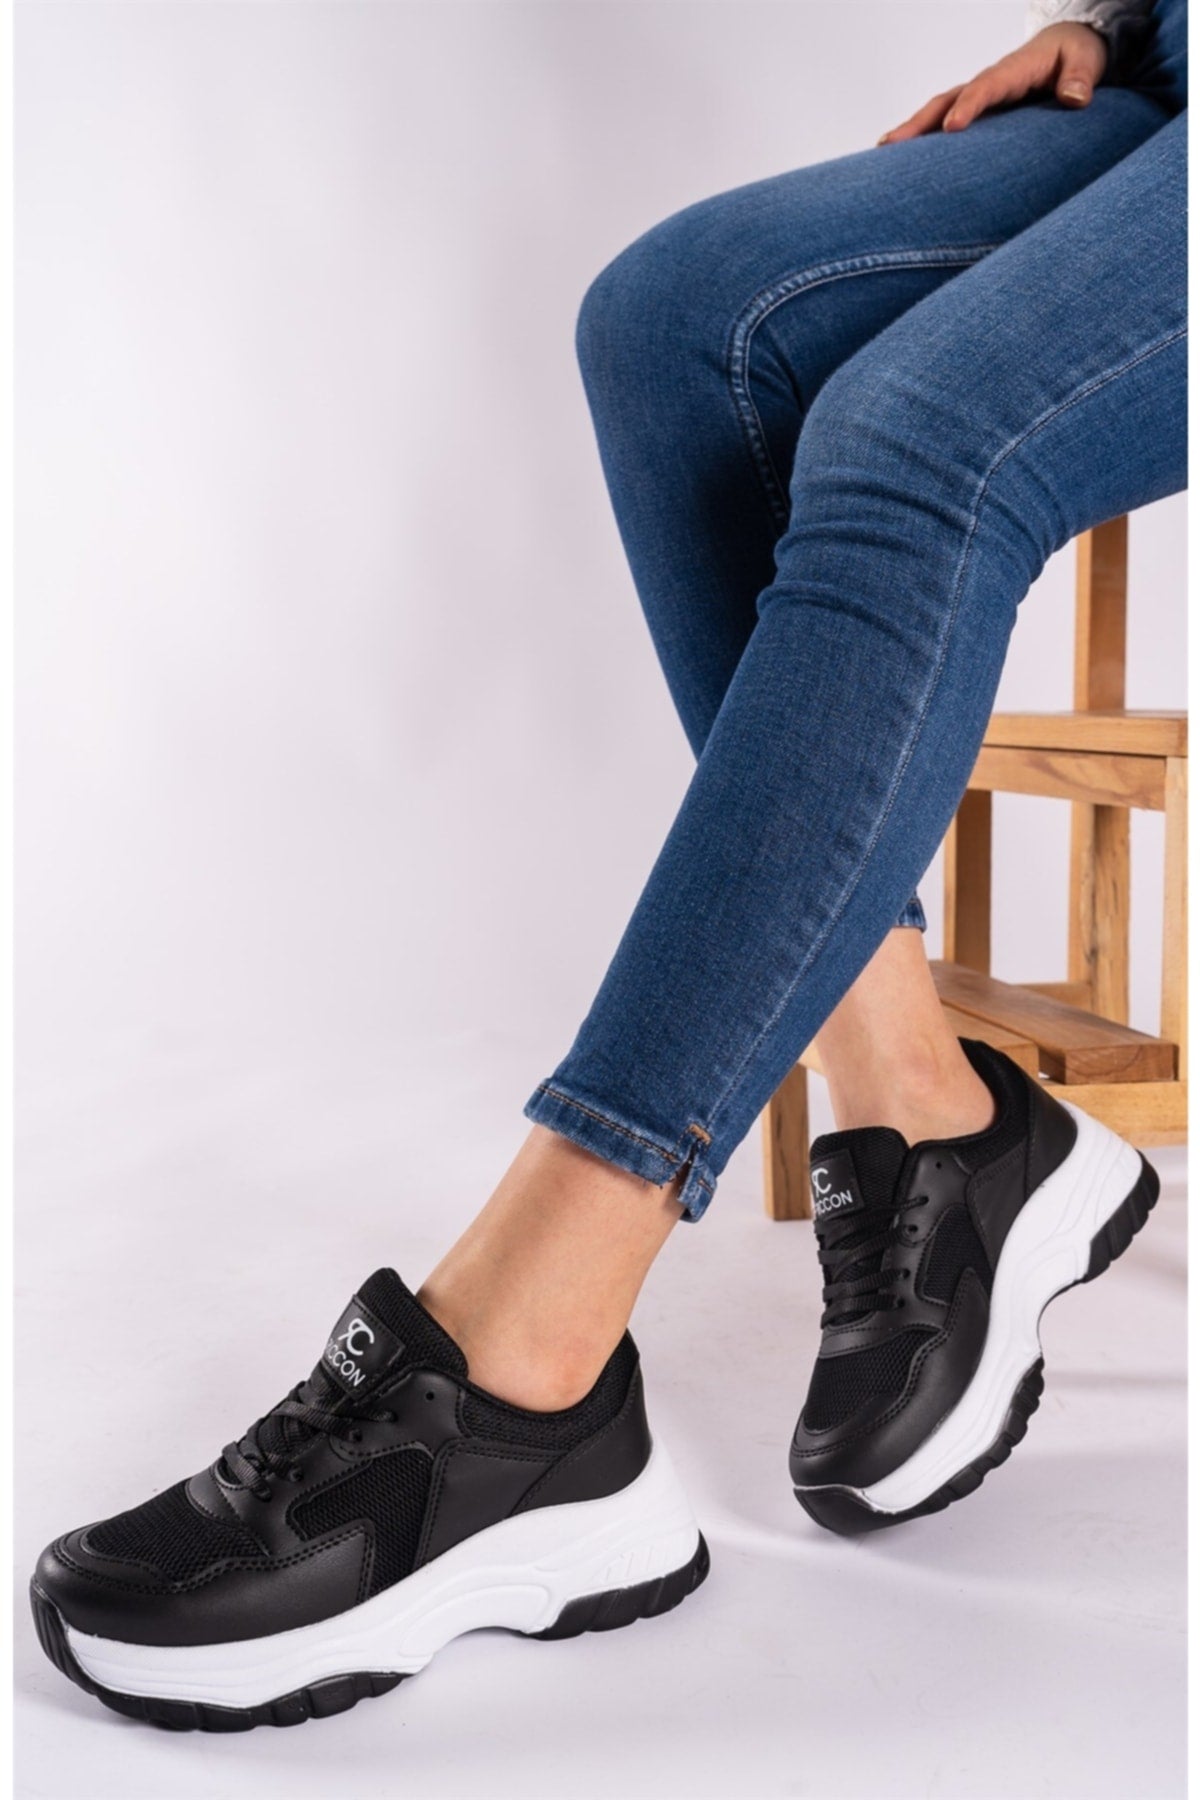 Black and White Women Sneaker 0012140